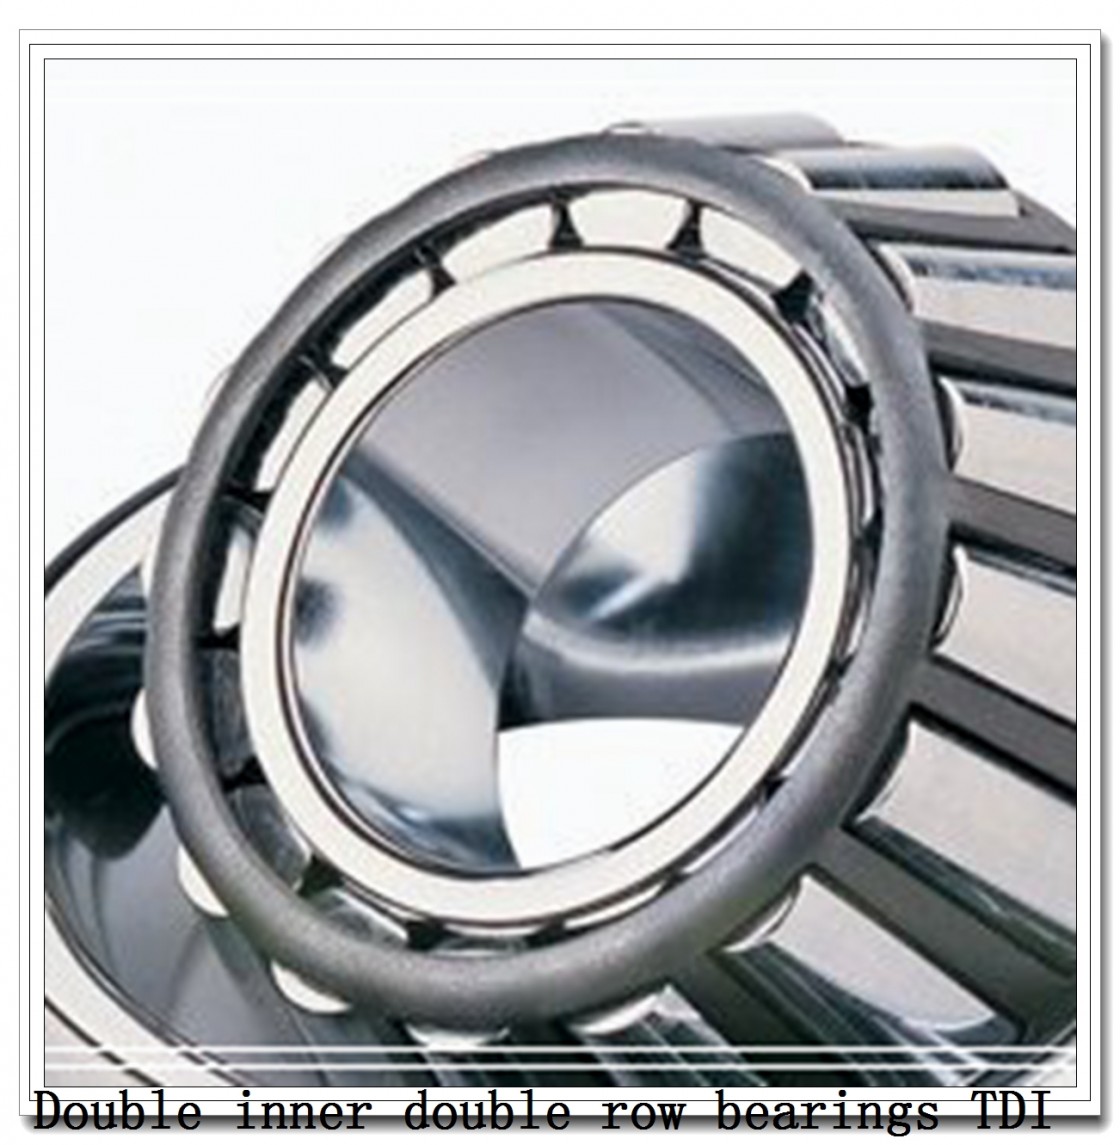 950TDO1250-1 Double inner double row bearings TDI